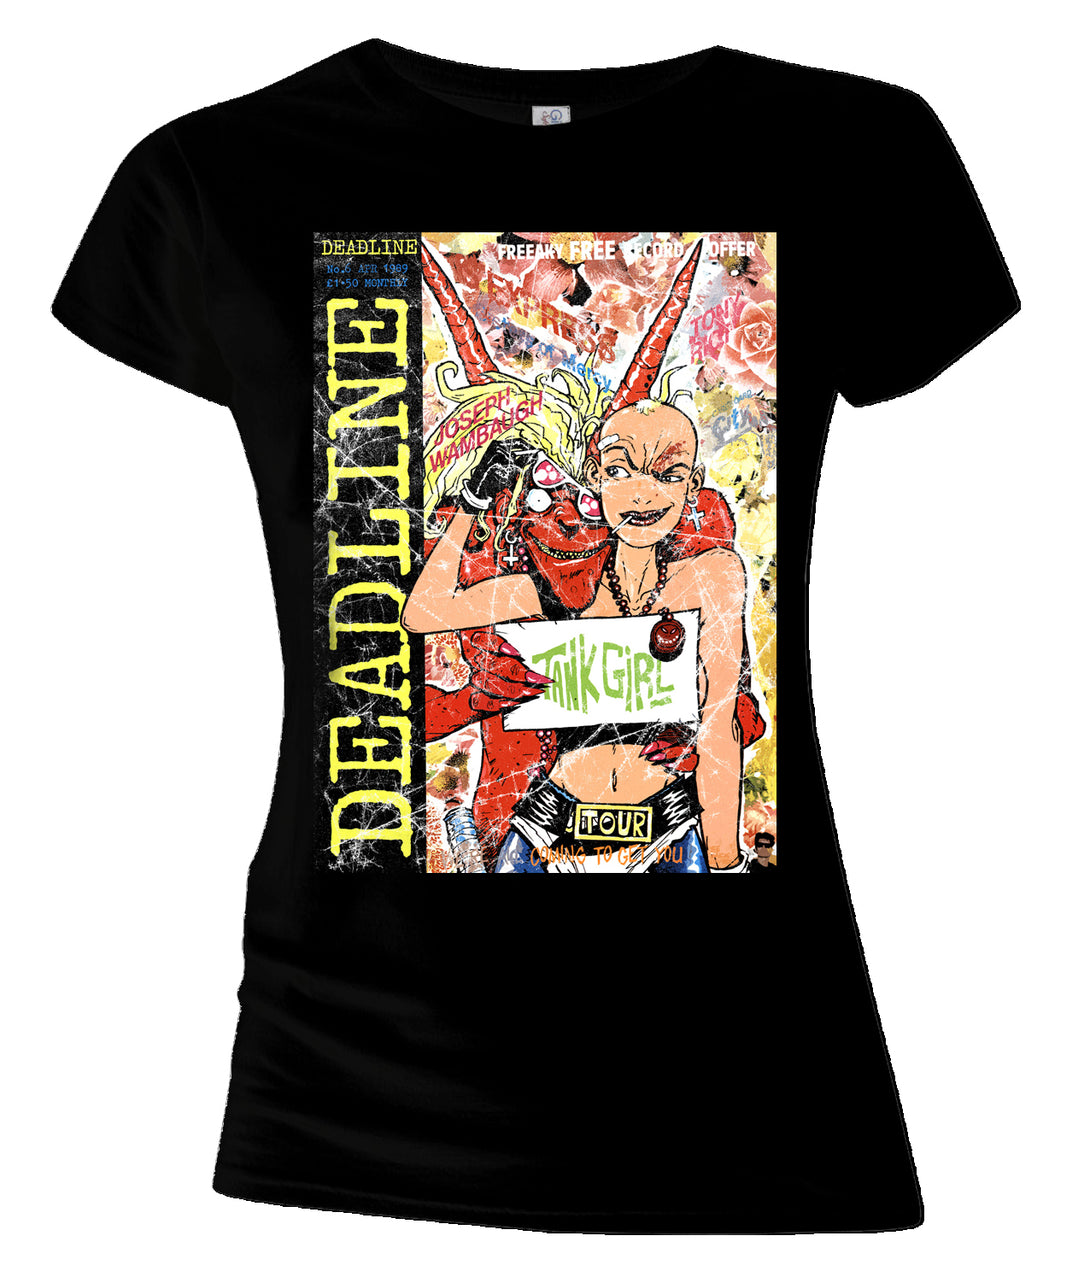 Deadline 6 Tank Booga Official Women's T-shirt (Black) - Urban Species 